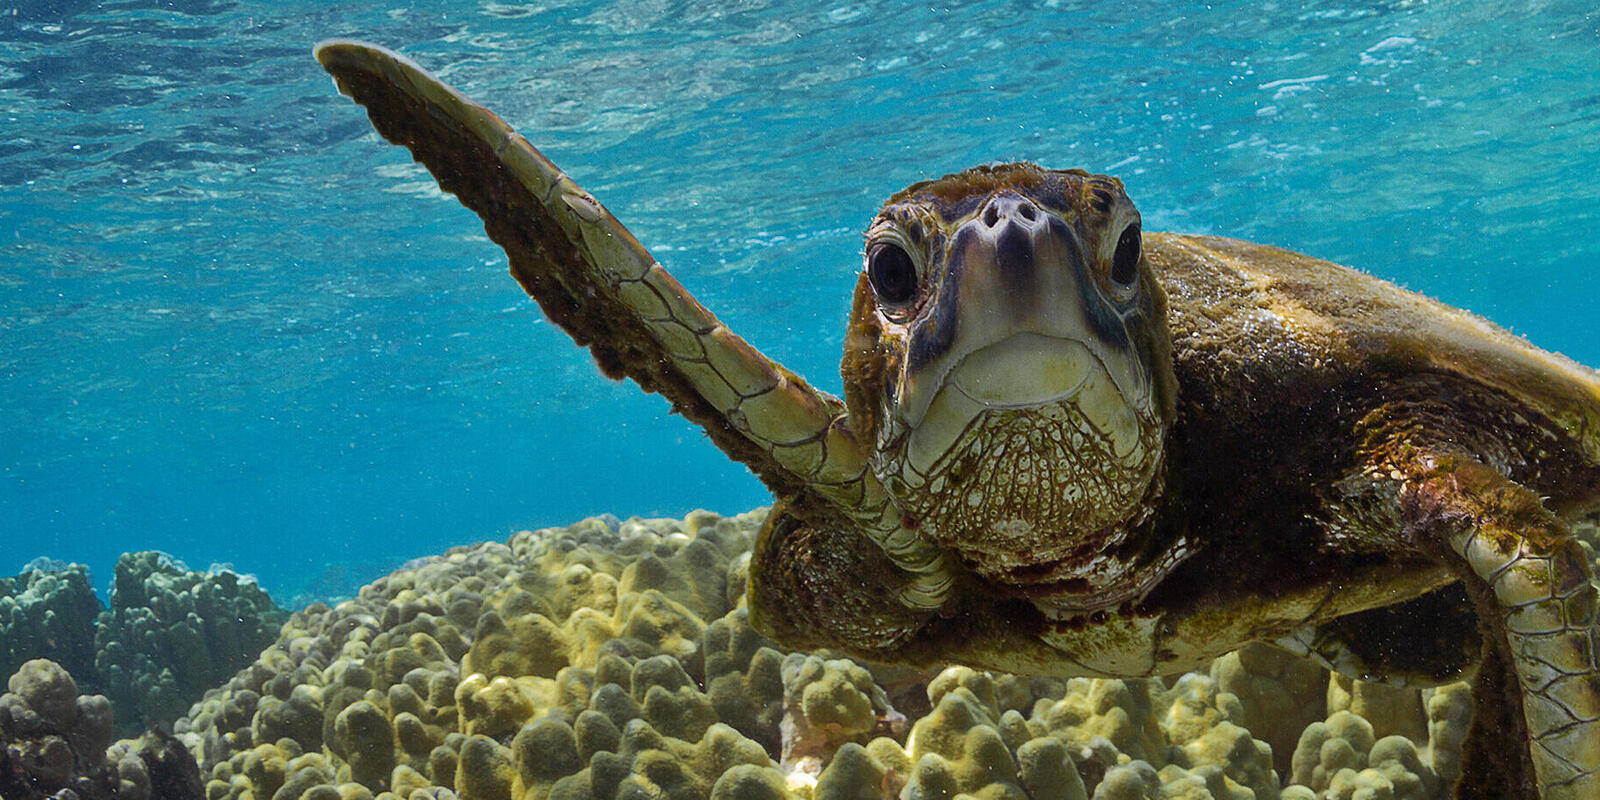 How long do sea turtles live?